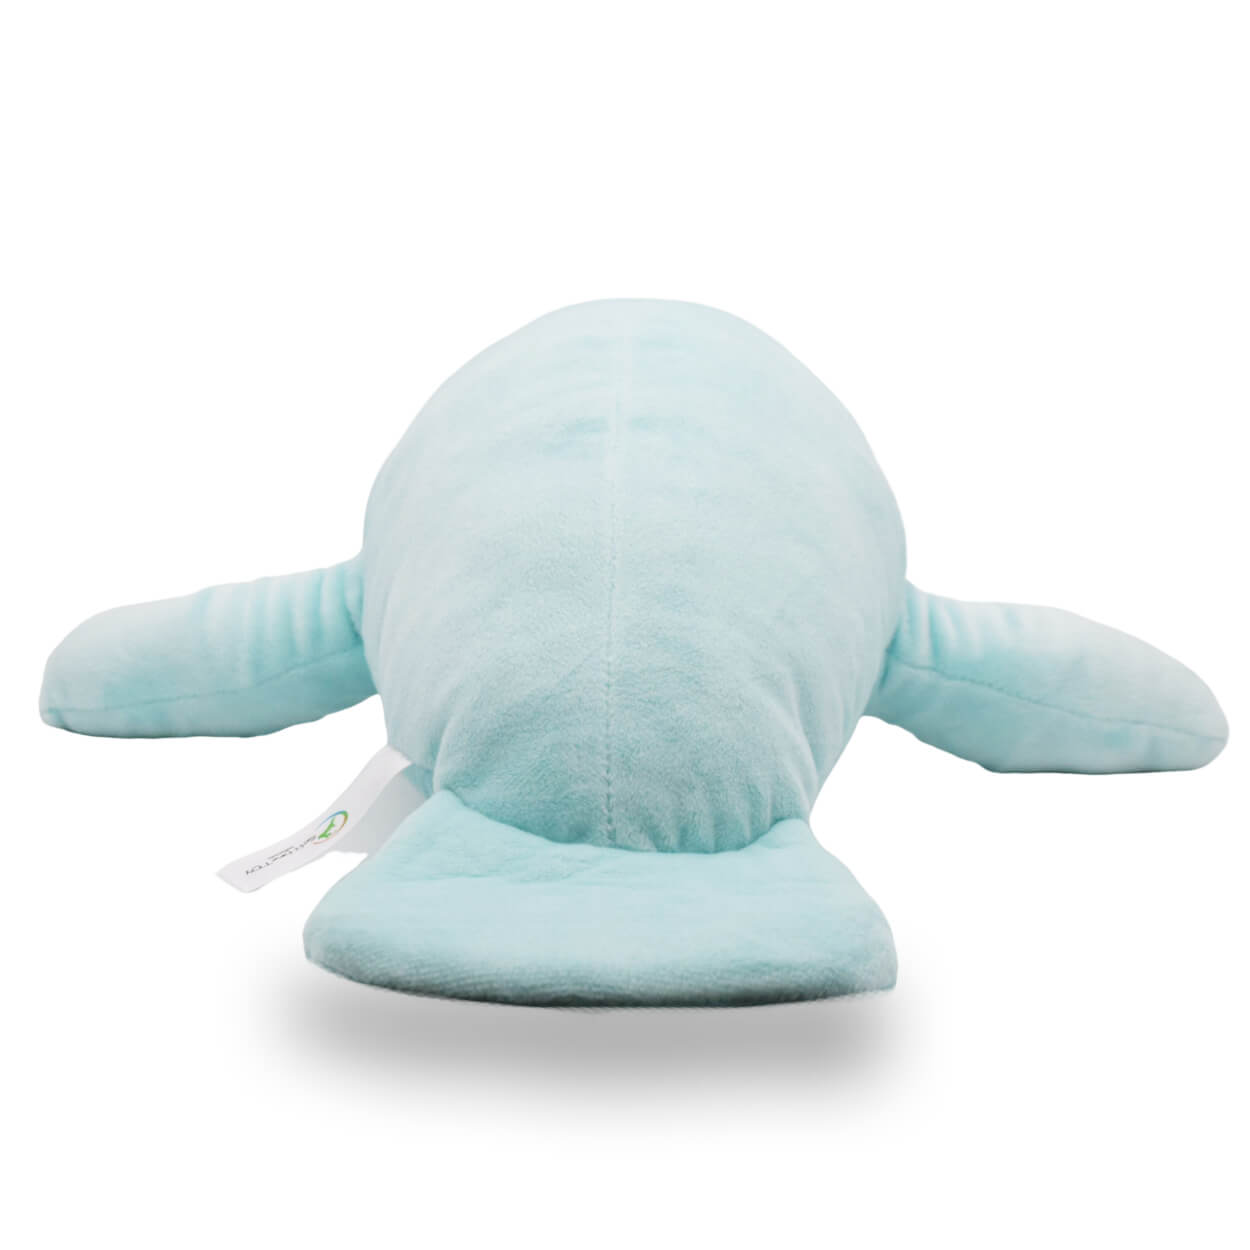 Realistic Steller's Sea Cow Stuffed Animal Plush Toy